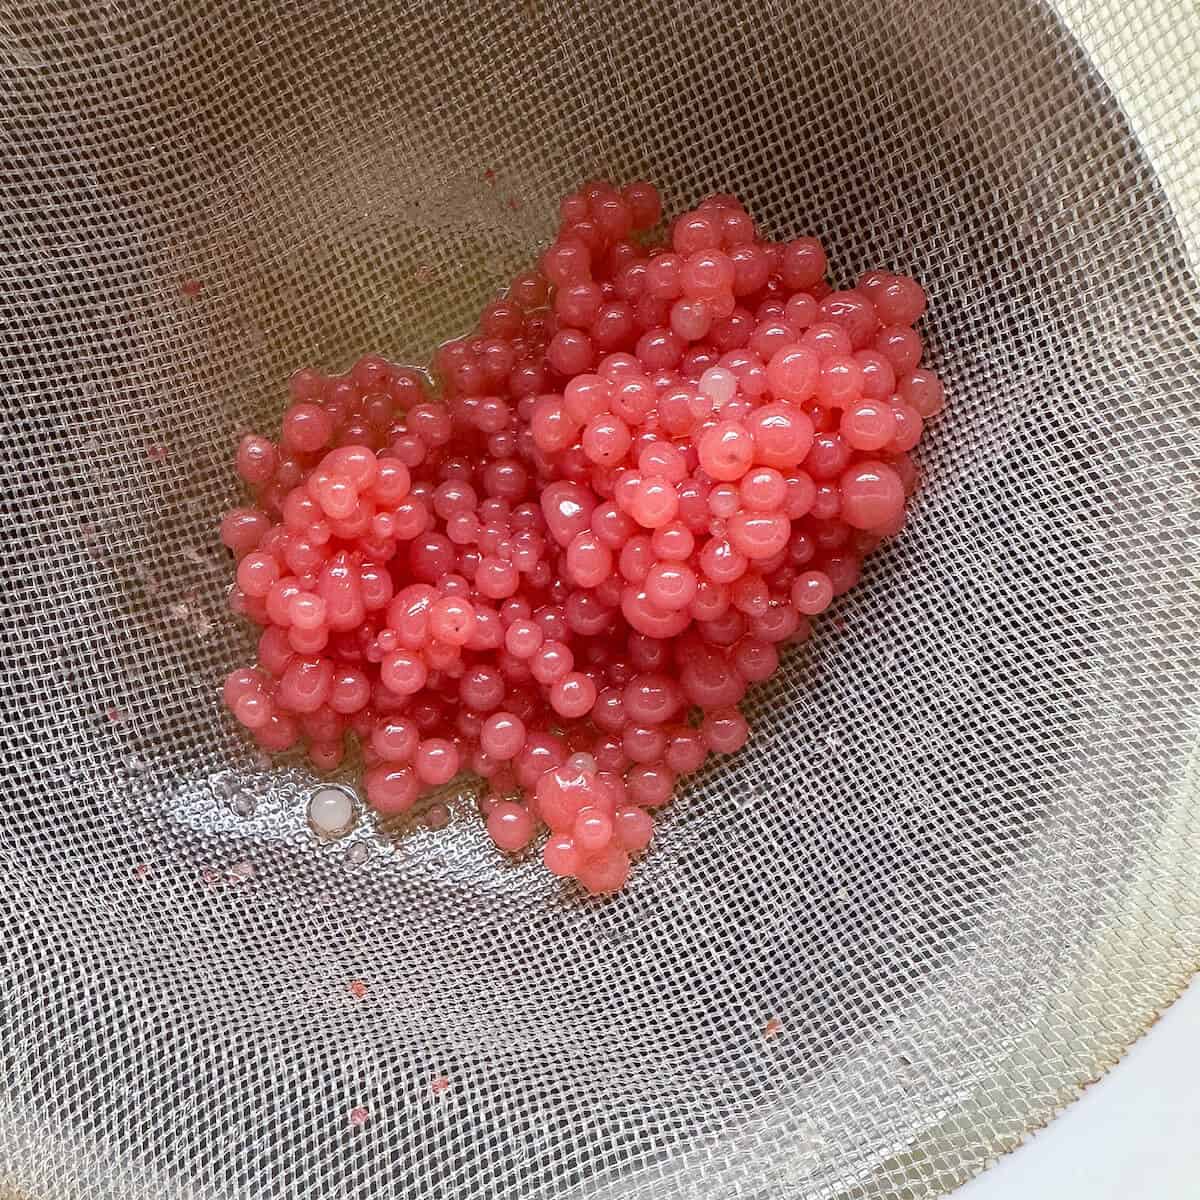 A sieve containing fruit caviar made from agar agar powder and fruit puree. 